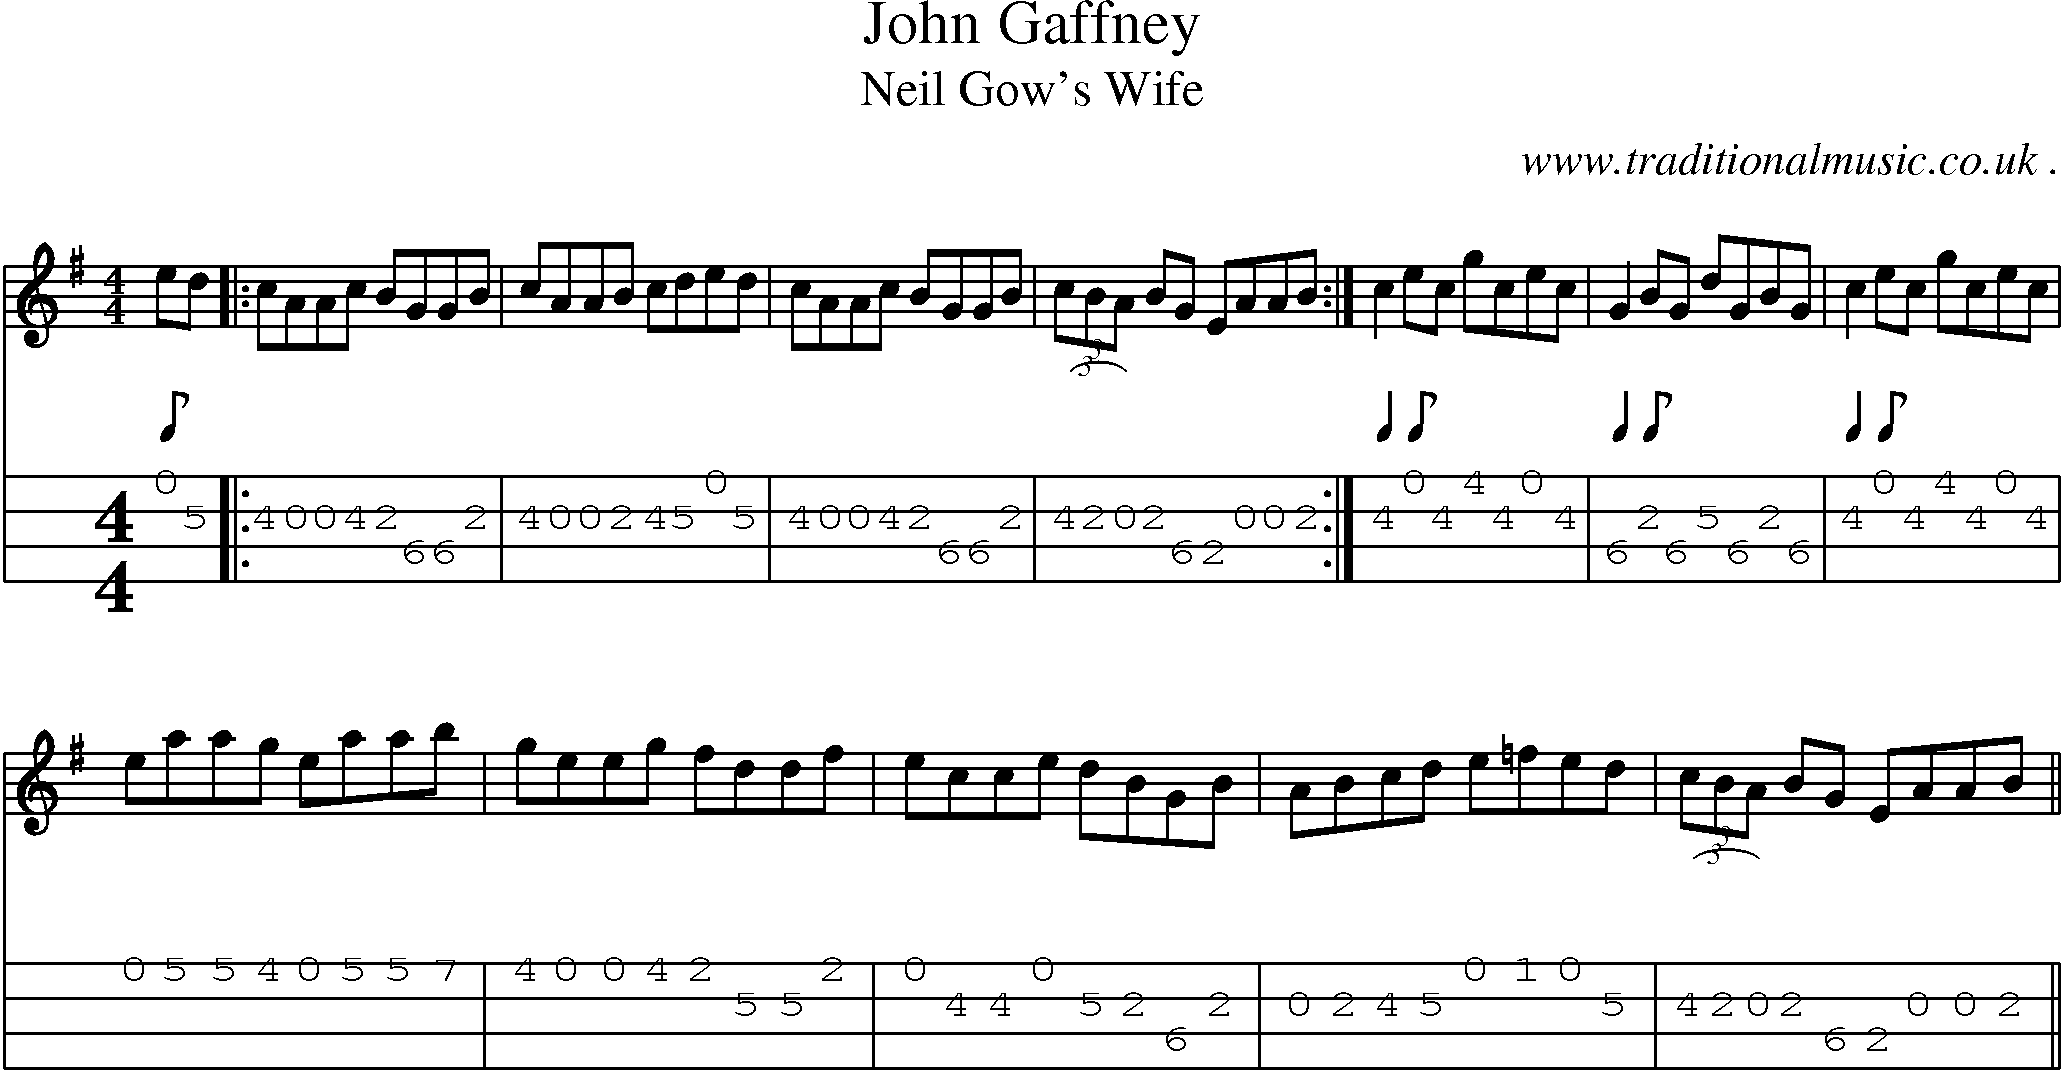 Sheet-Music and Mandolin Tabs for John Gaffney